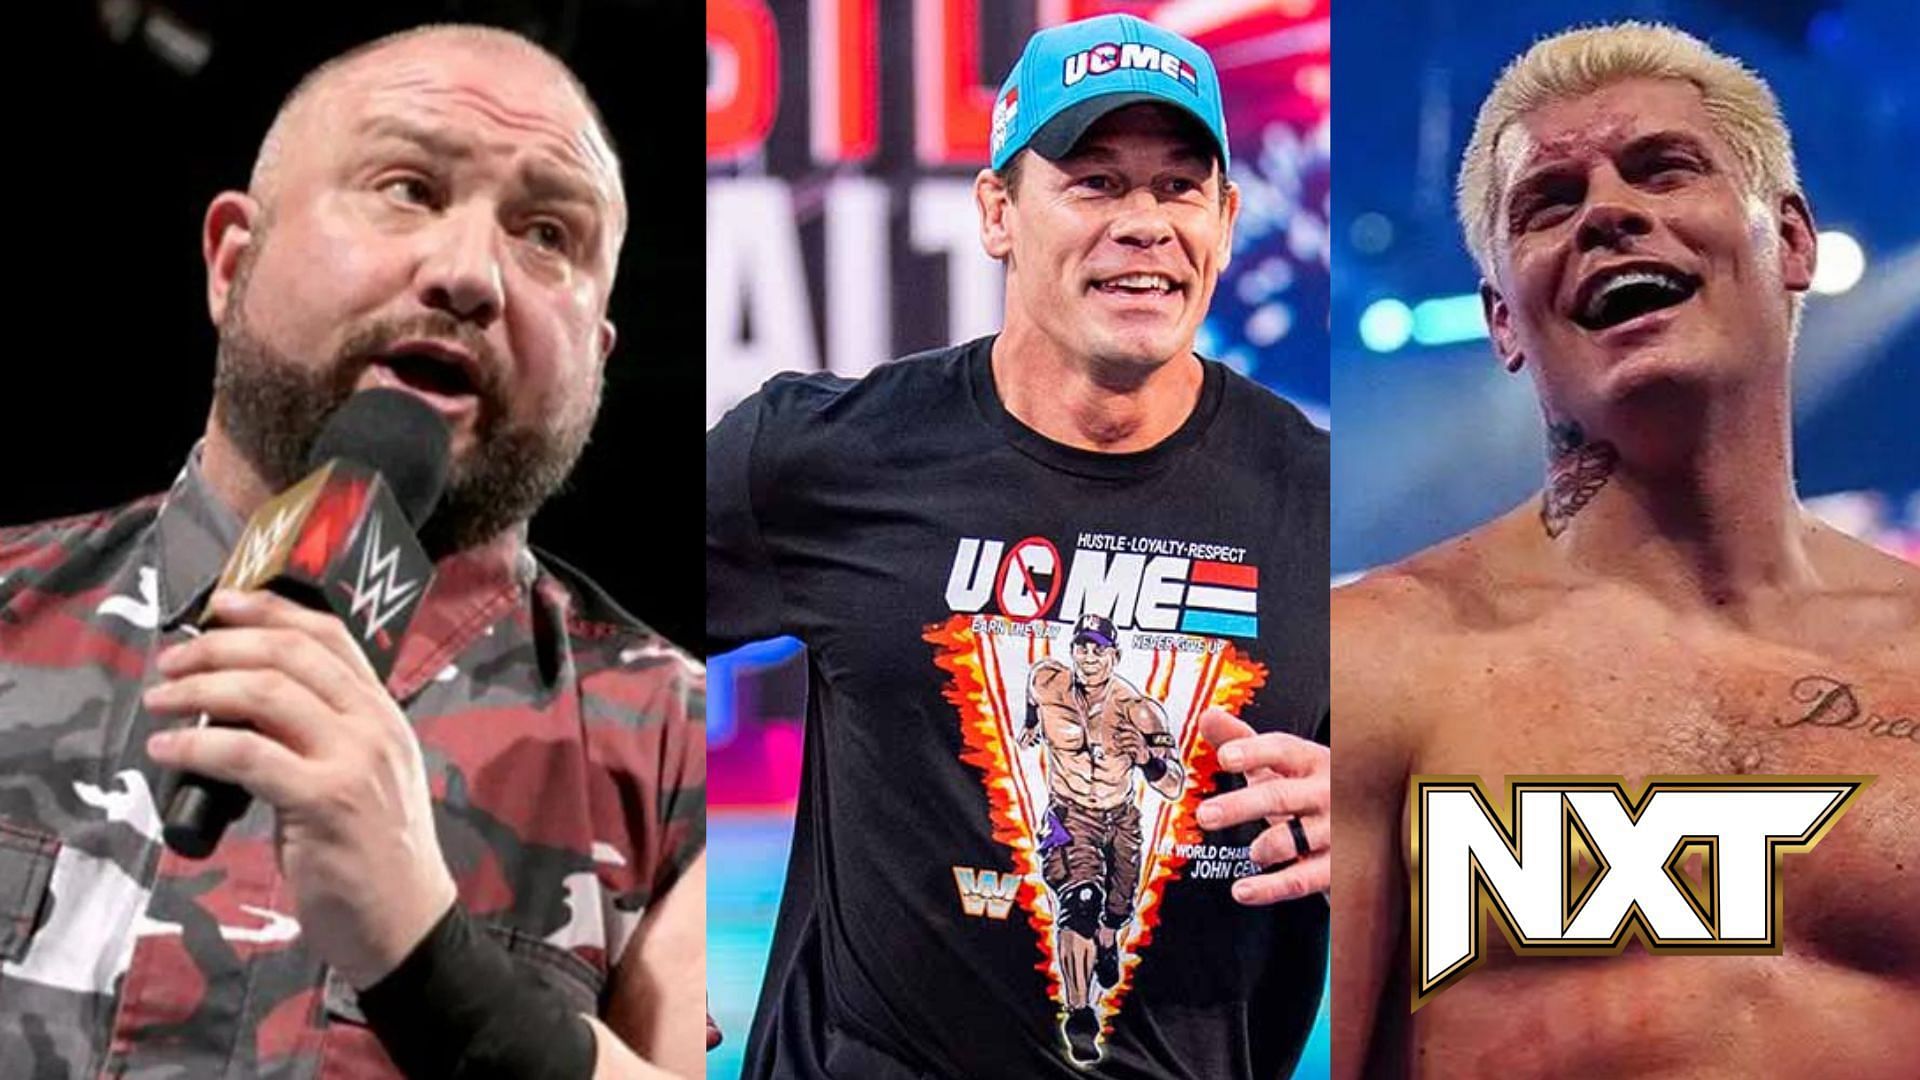 Next week, NXT will feature John Cena and Cody Rhodes